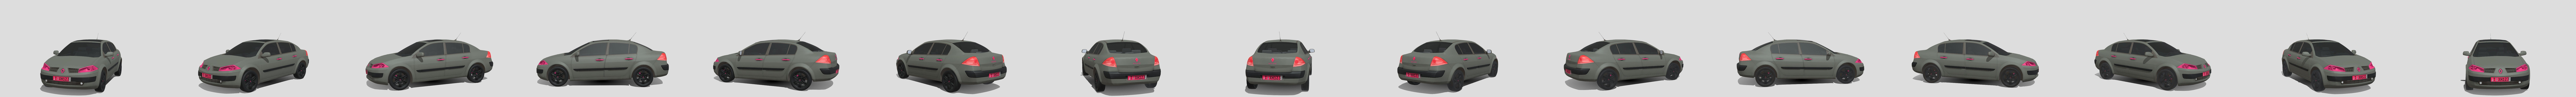 Renault Megane II Sedan 3D Model - 3DCADBrowser